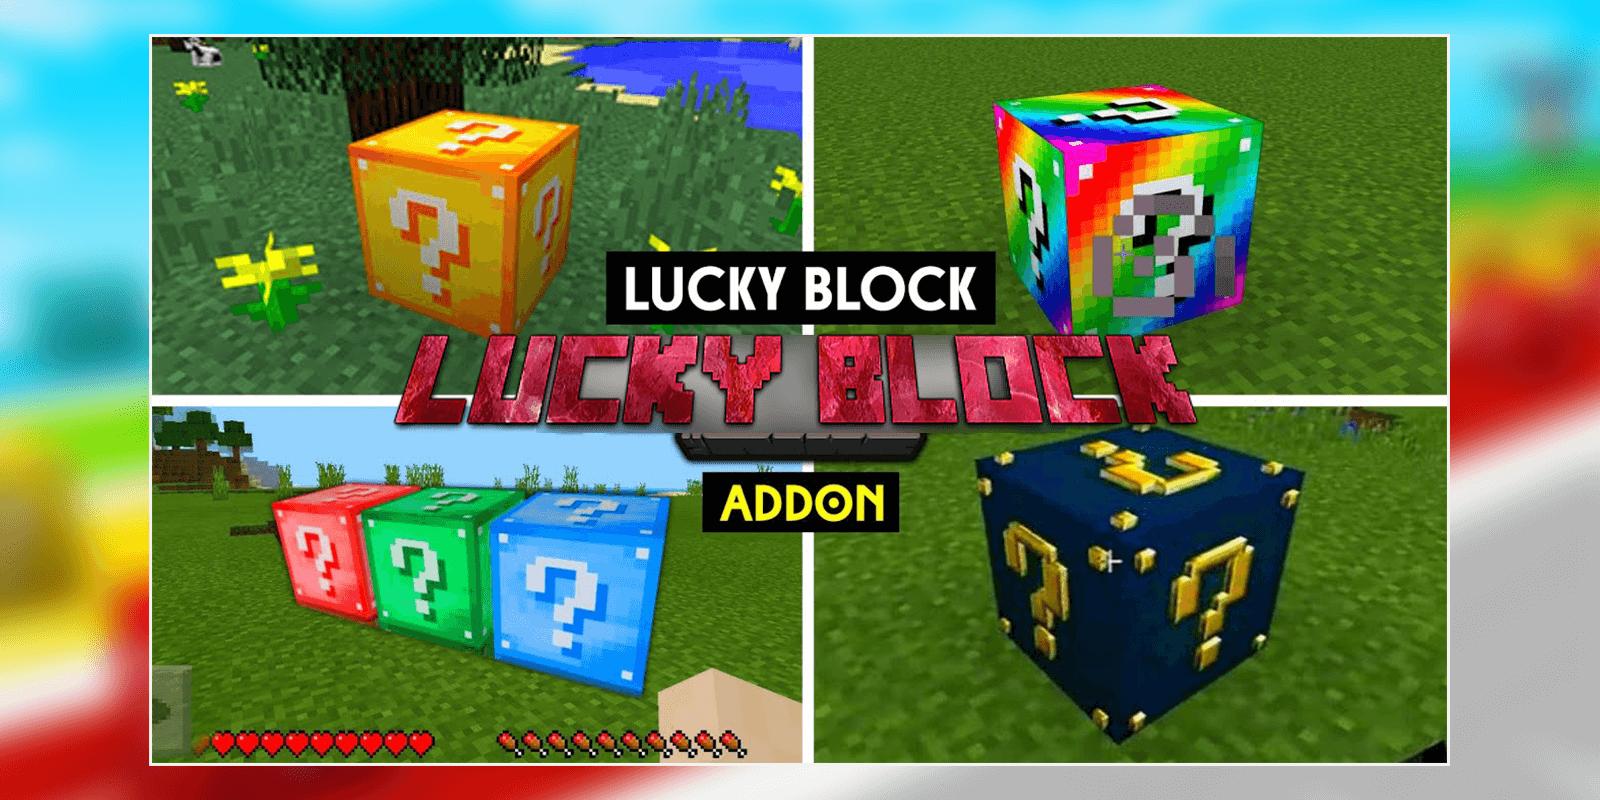 Lucky Block Race 1.12 Minecraft Map